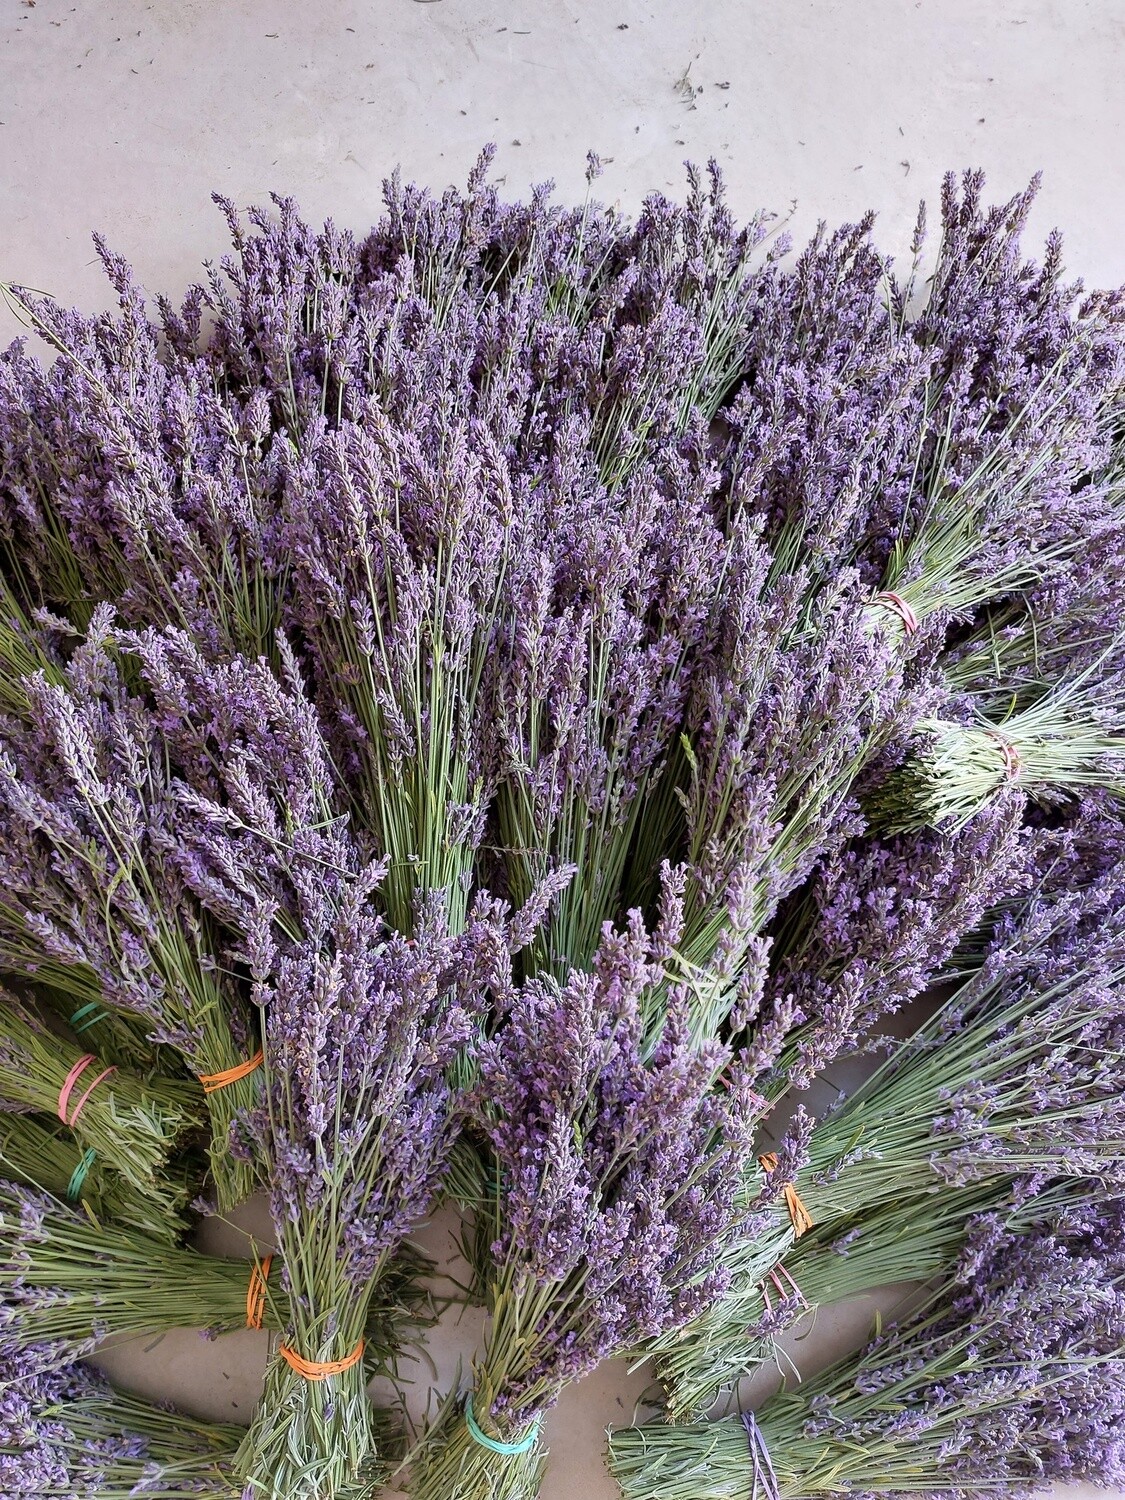 Dried Lavender Bundles